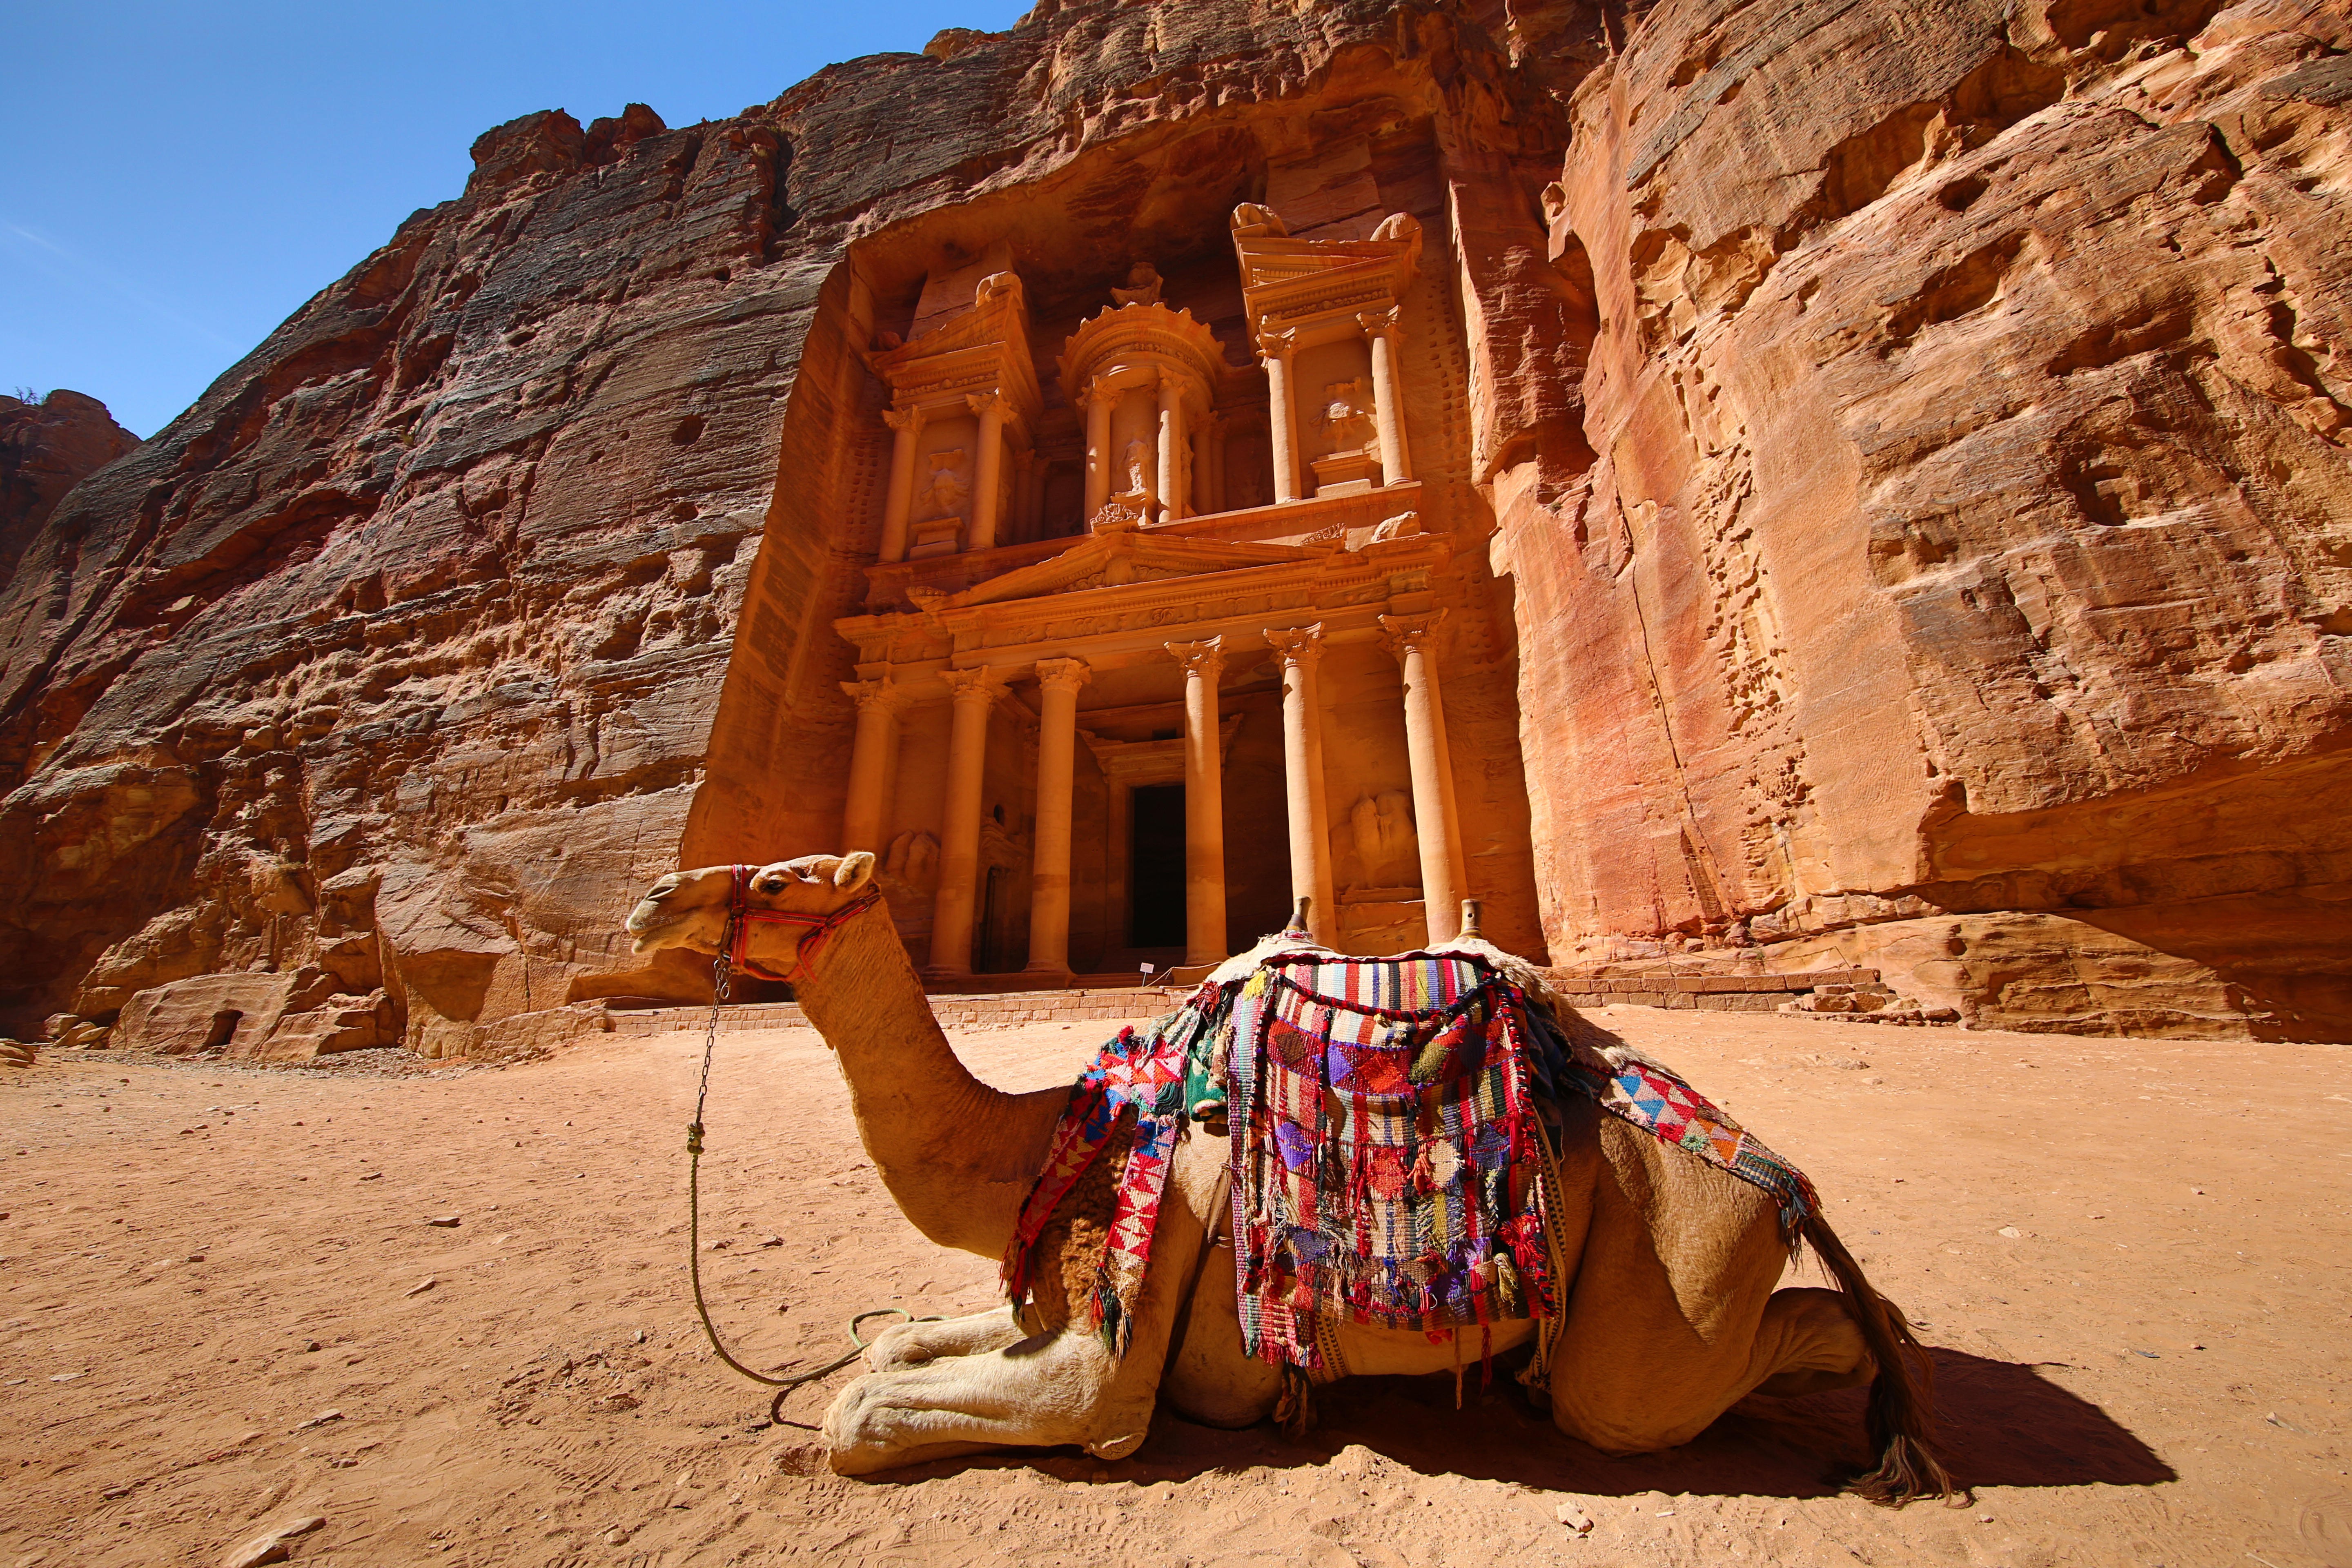 The Top Attractions Visit in Jordan